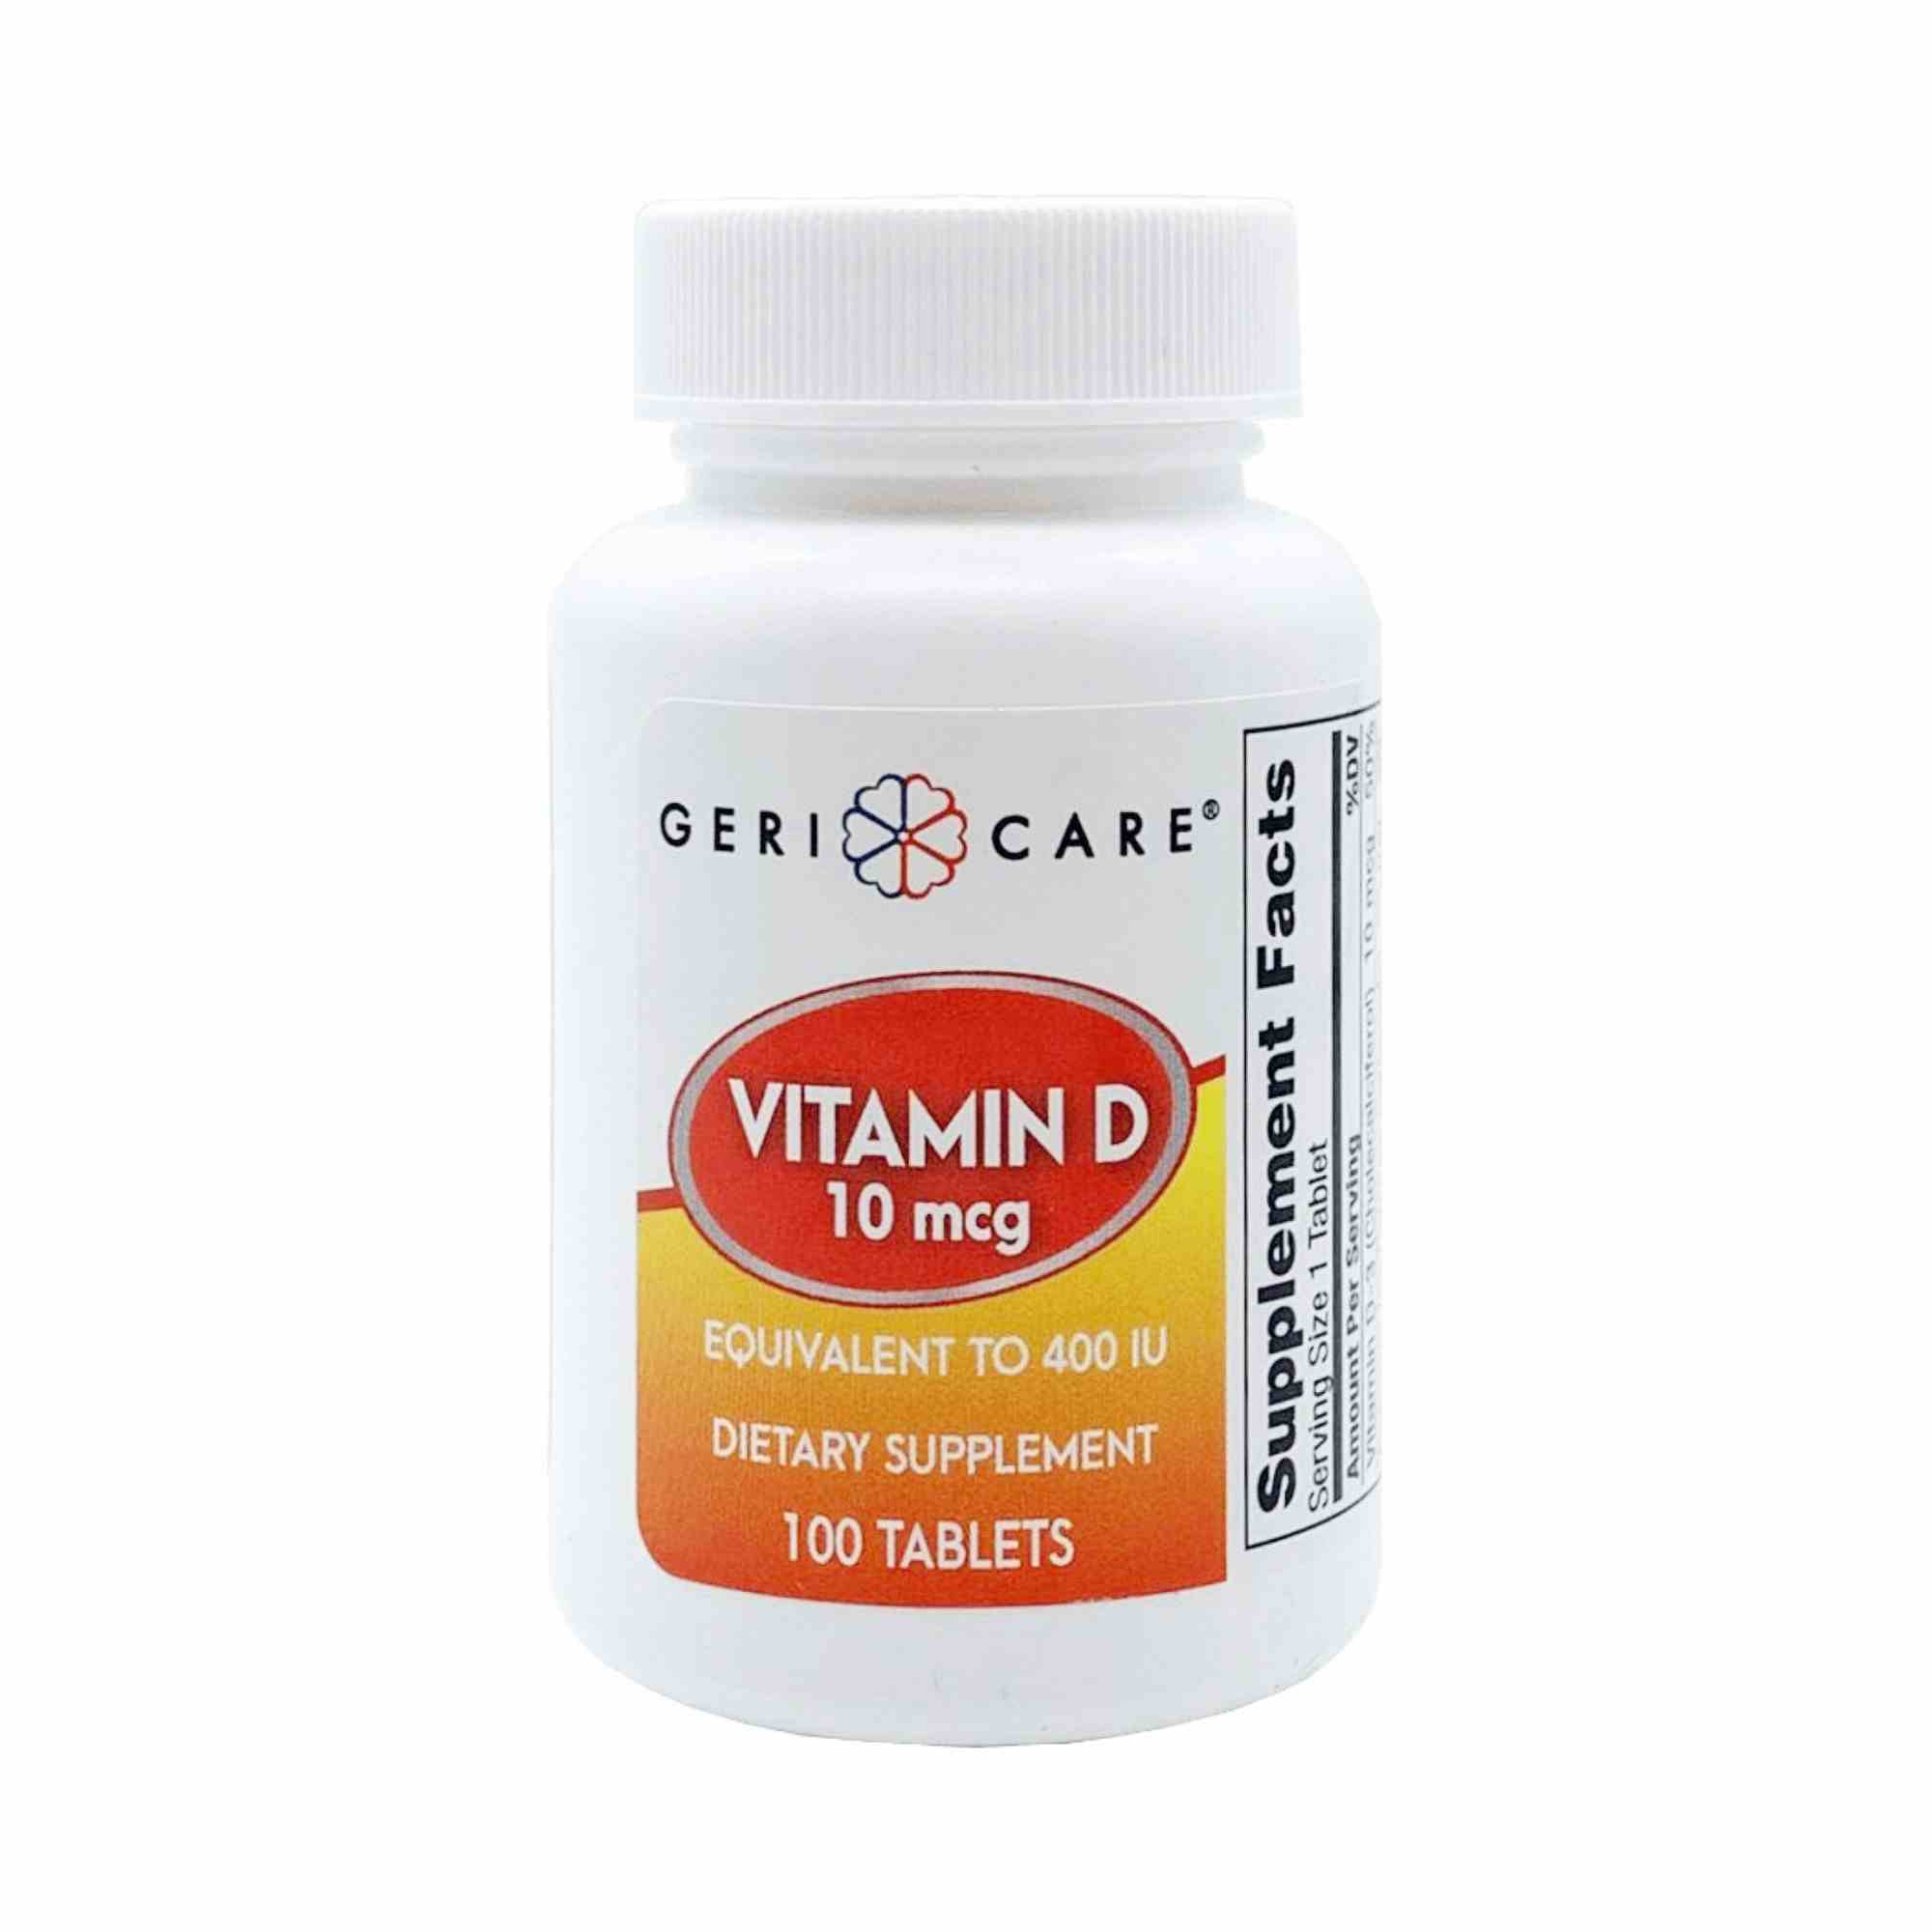 Geri-Care Vitamin D Dietary Supplement, 10 mcg, 100 Tablets, 60-874-01, 1 Bottle